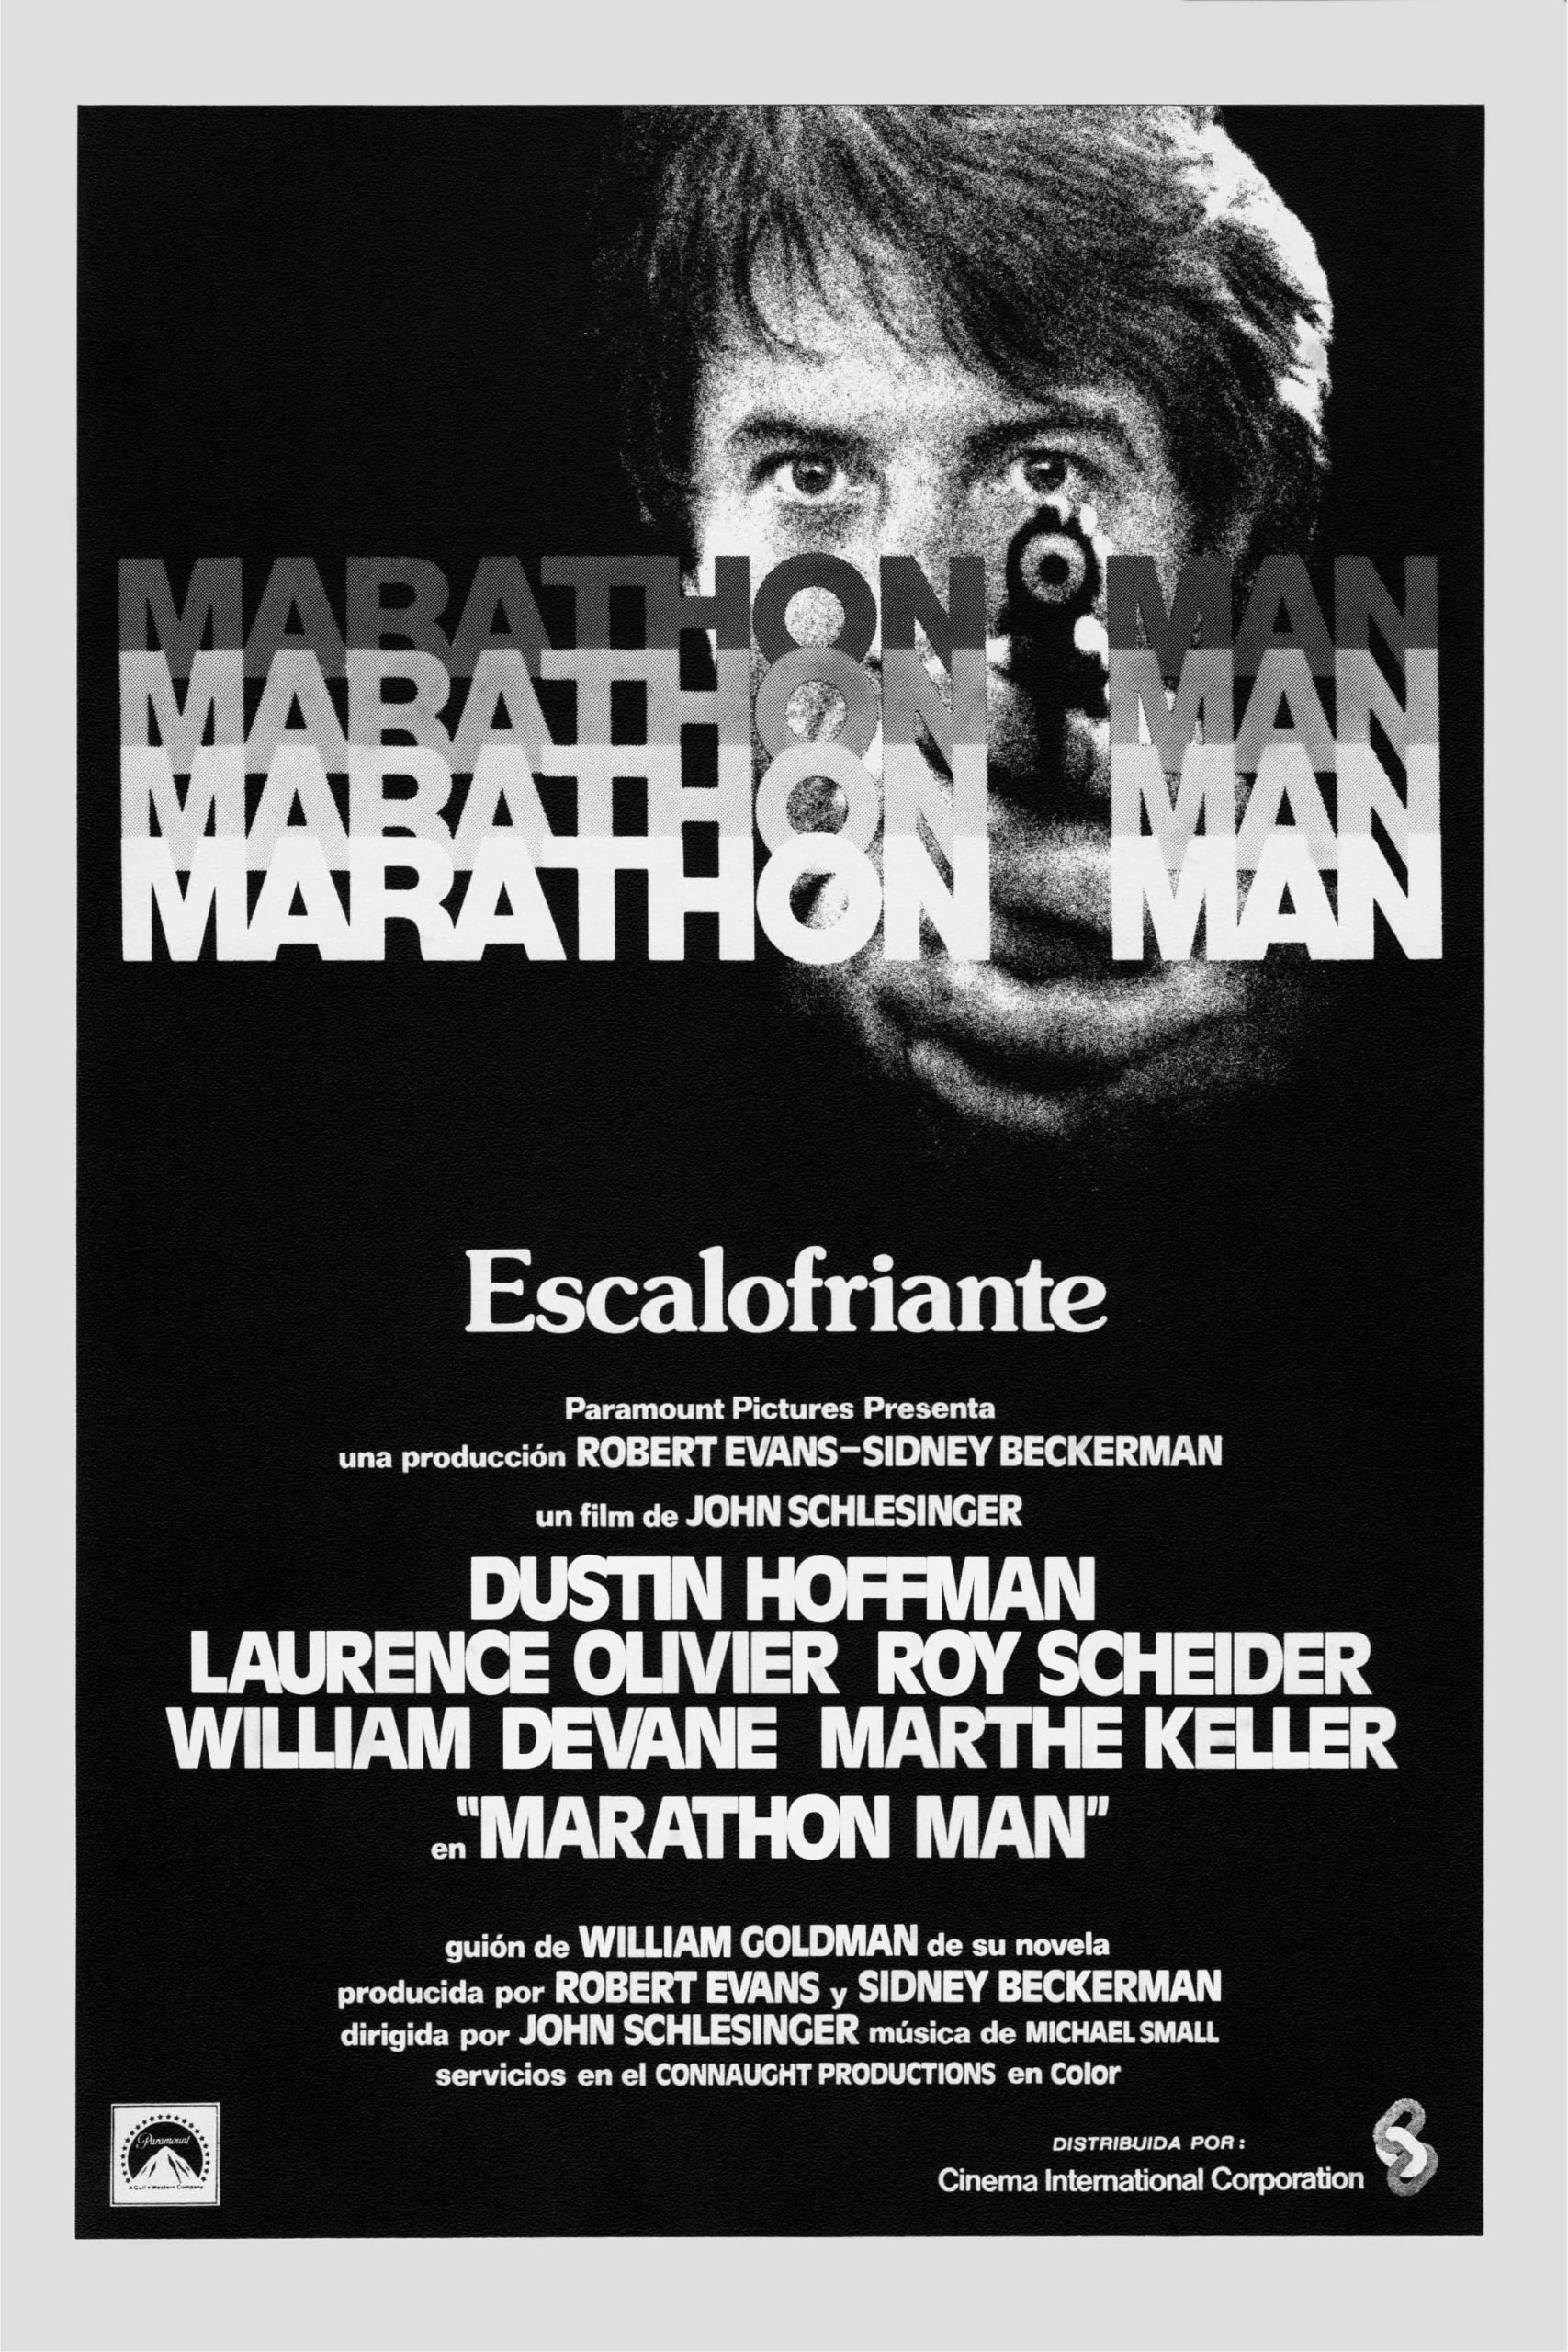 Poster de la película "Marathon Man"